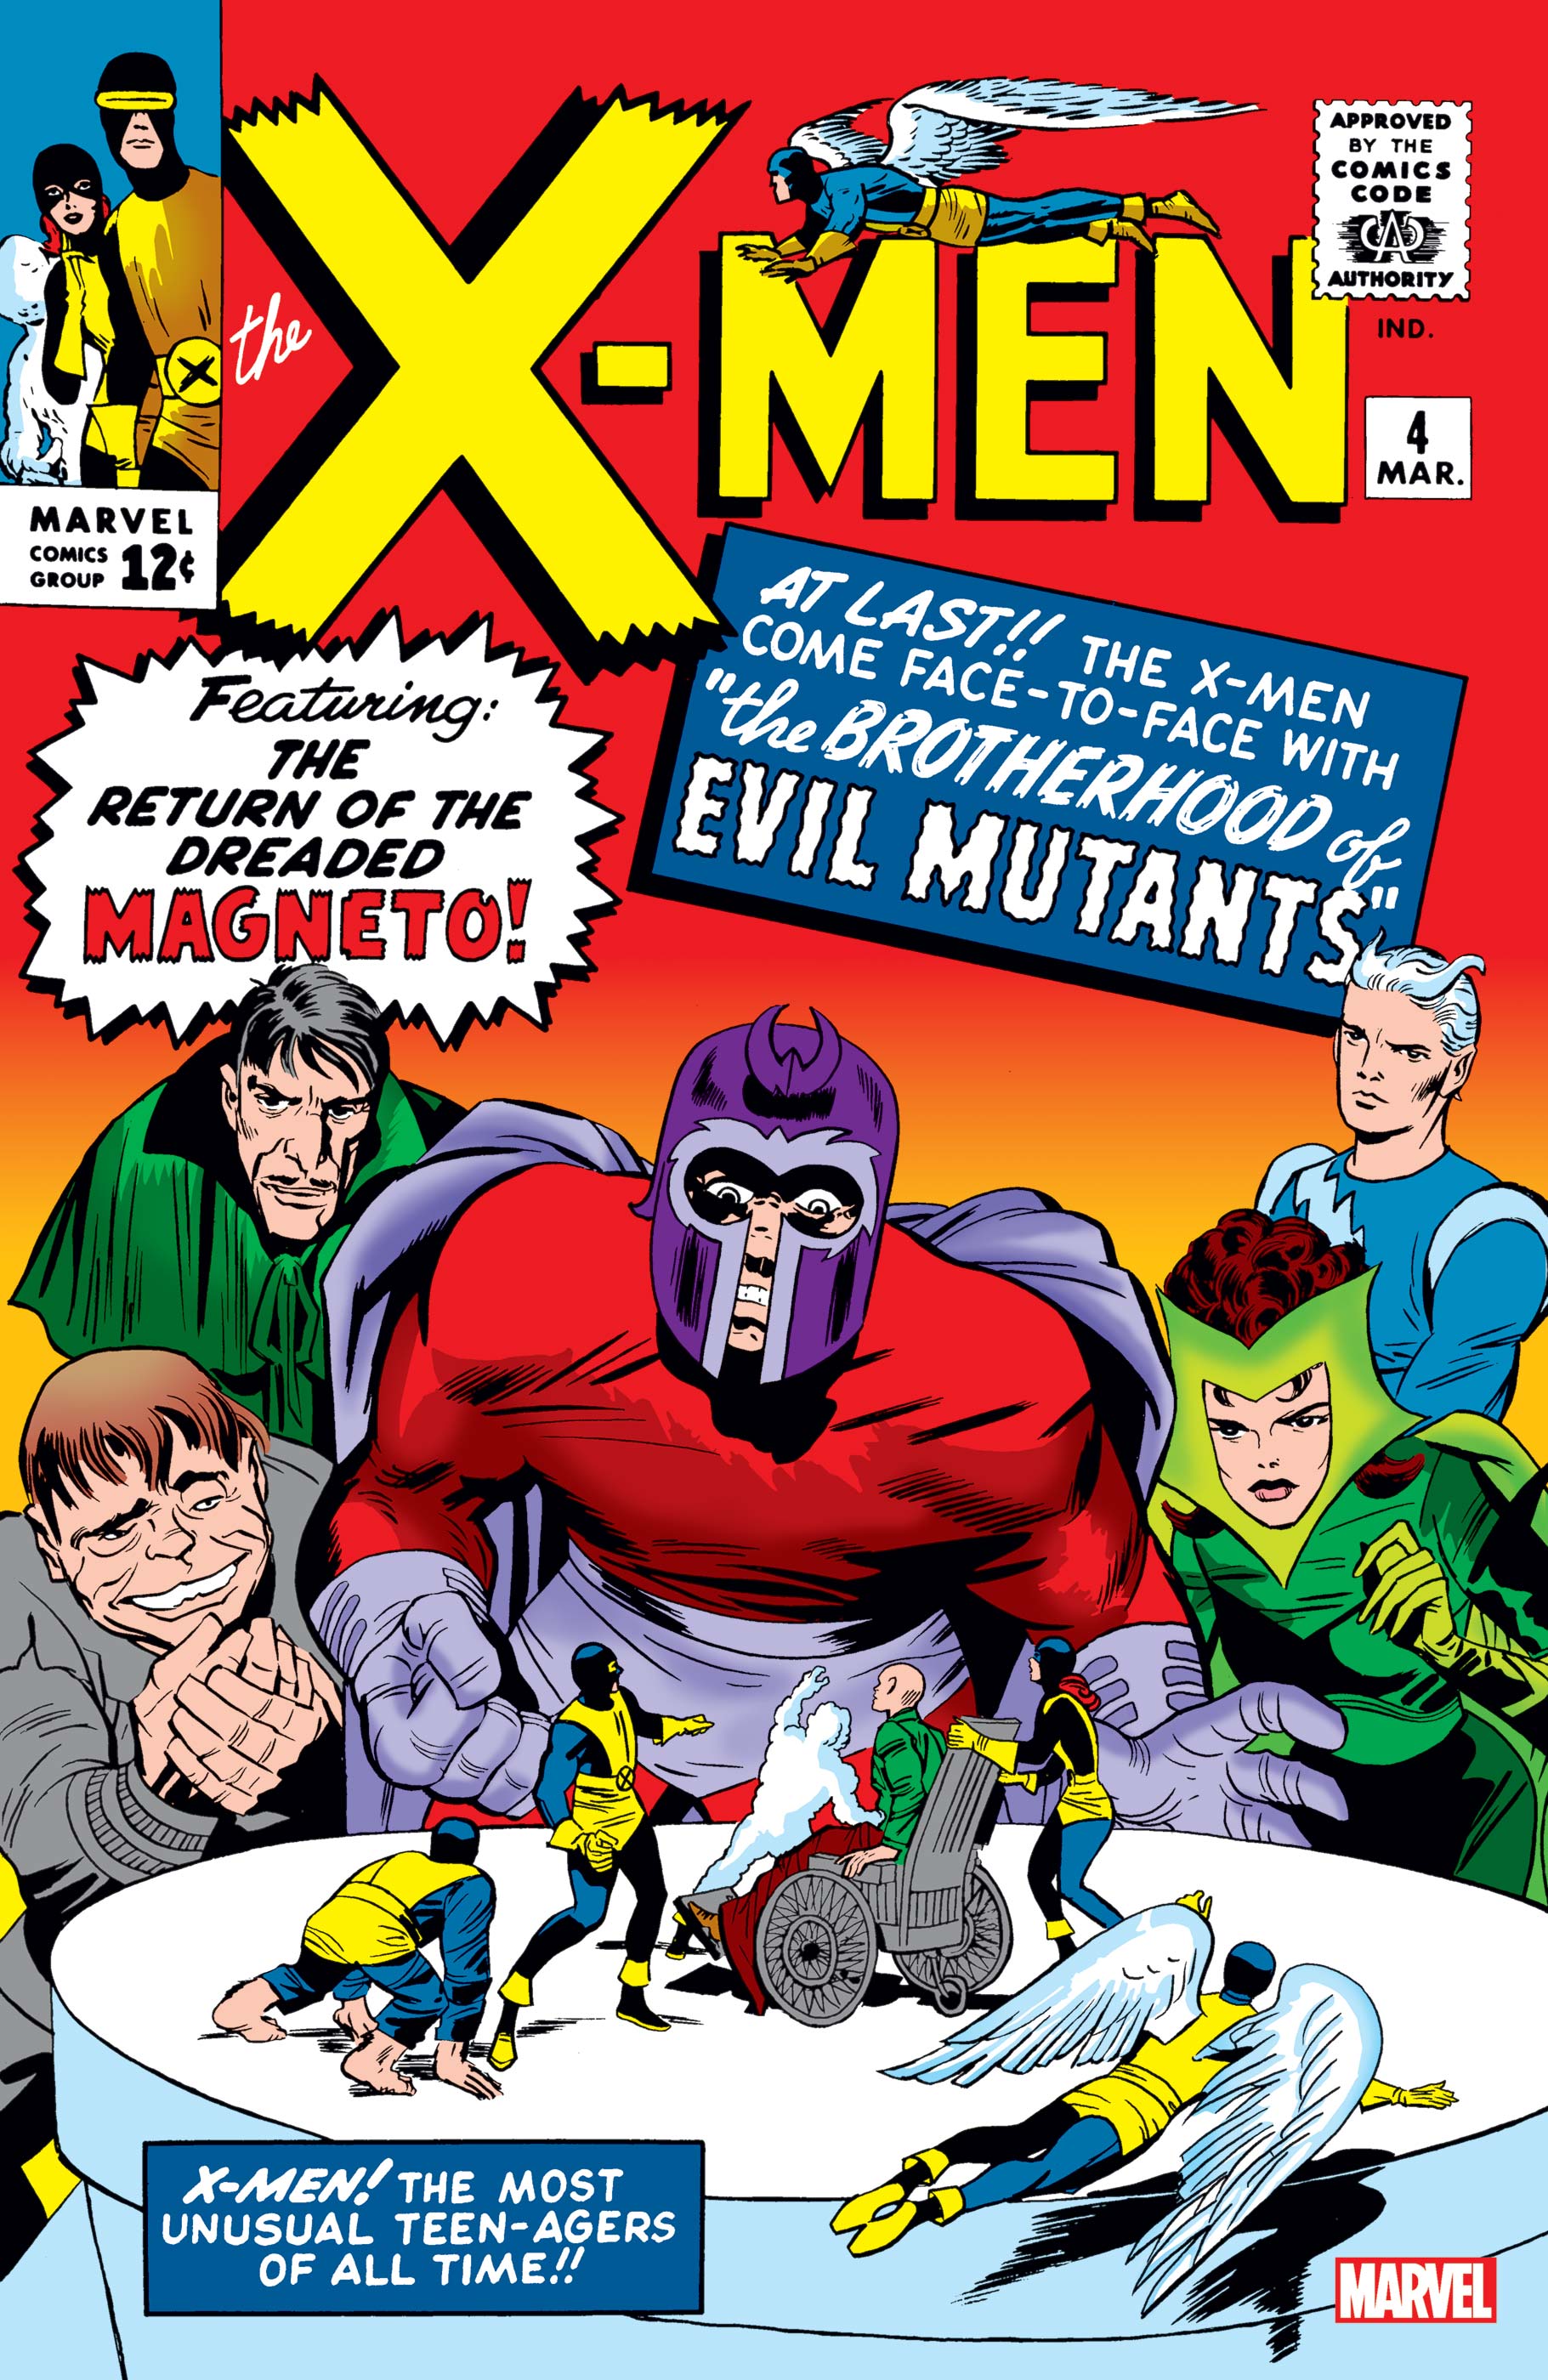 X-Men: Facsimile Edition (2020) #4